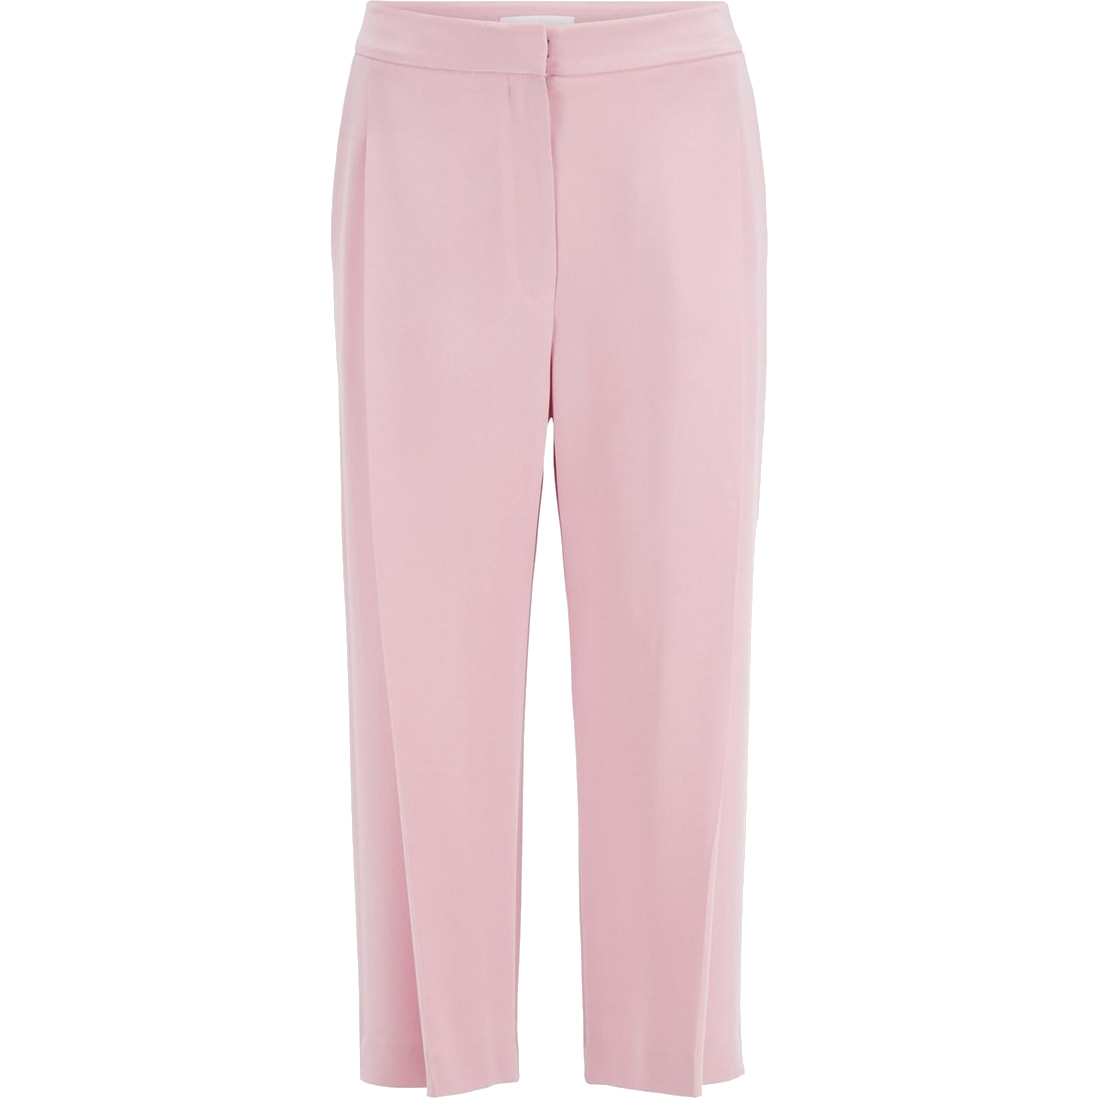 Hugo Boss Tibeca Trousers in Pink